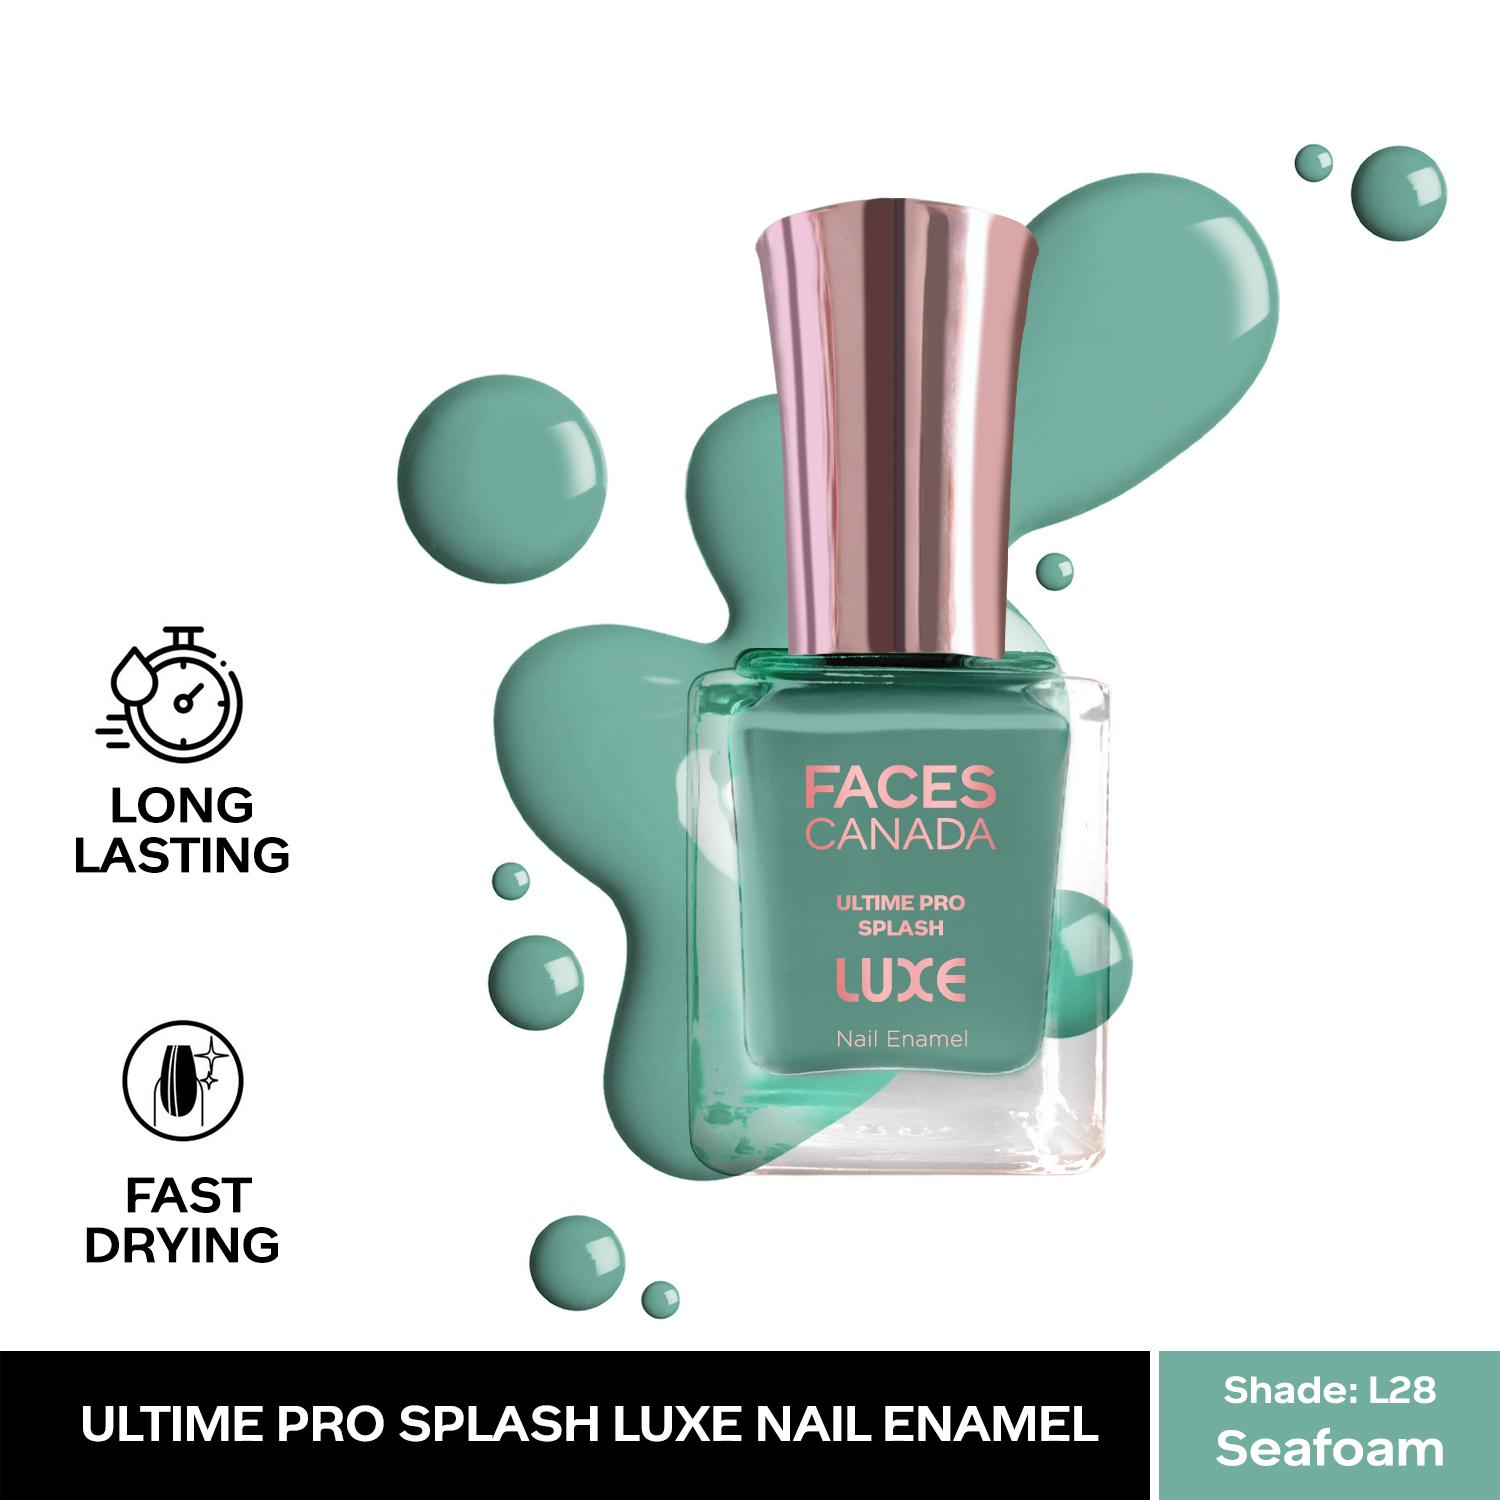 Faces Canada | Faces Canada Ultime Pro Splash Luxe Nail Enamel - Seafoam (L28), Glossy Finish (12 ml)